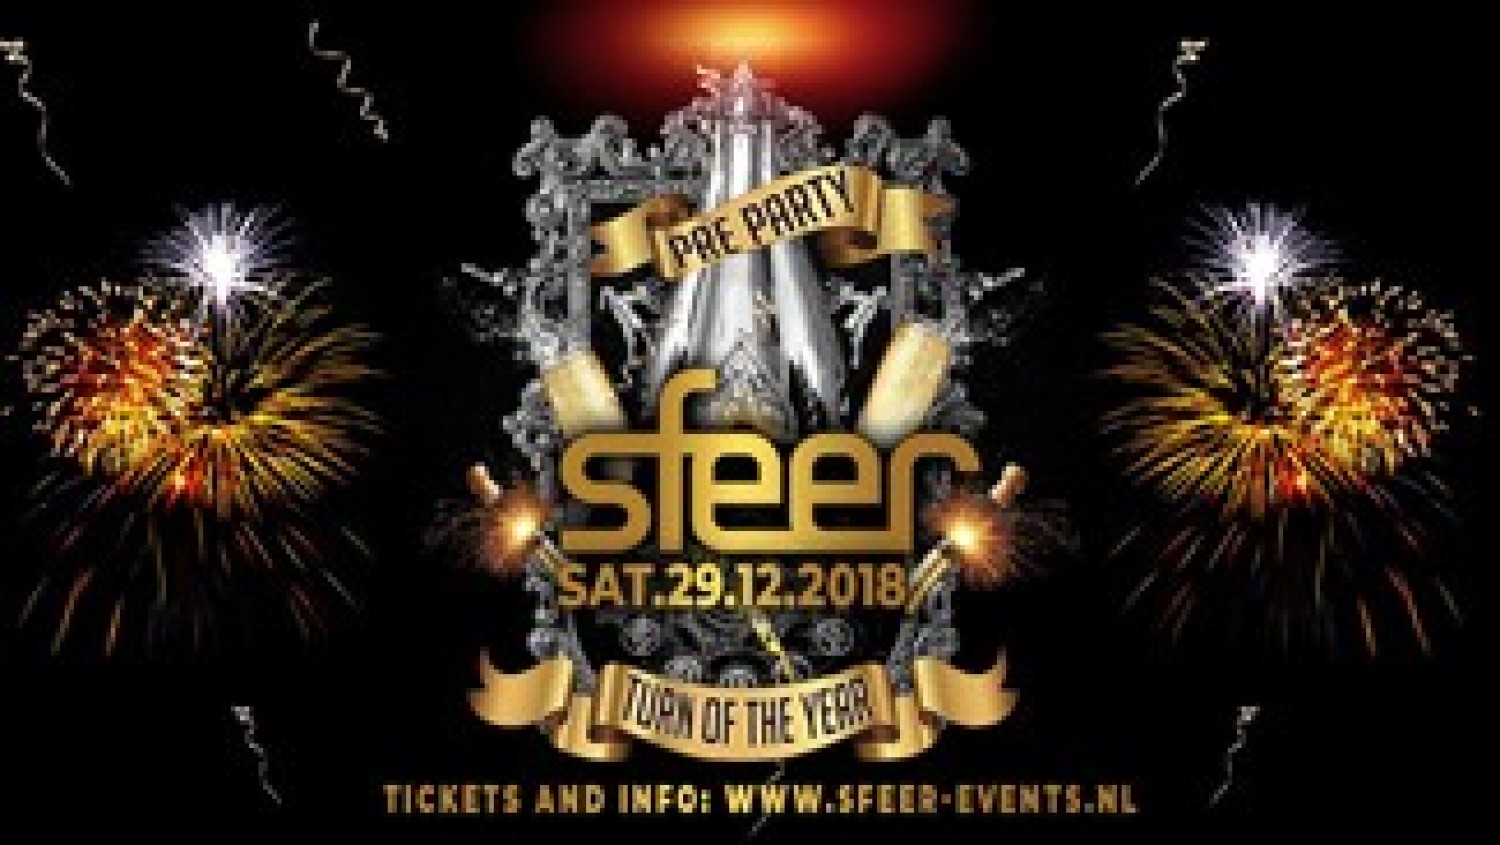 Party nieuws: Tickets SFEER - Turn of the Year met 10 EURO voordeel!